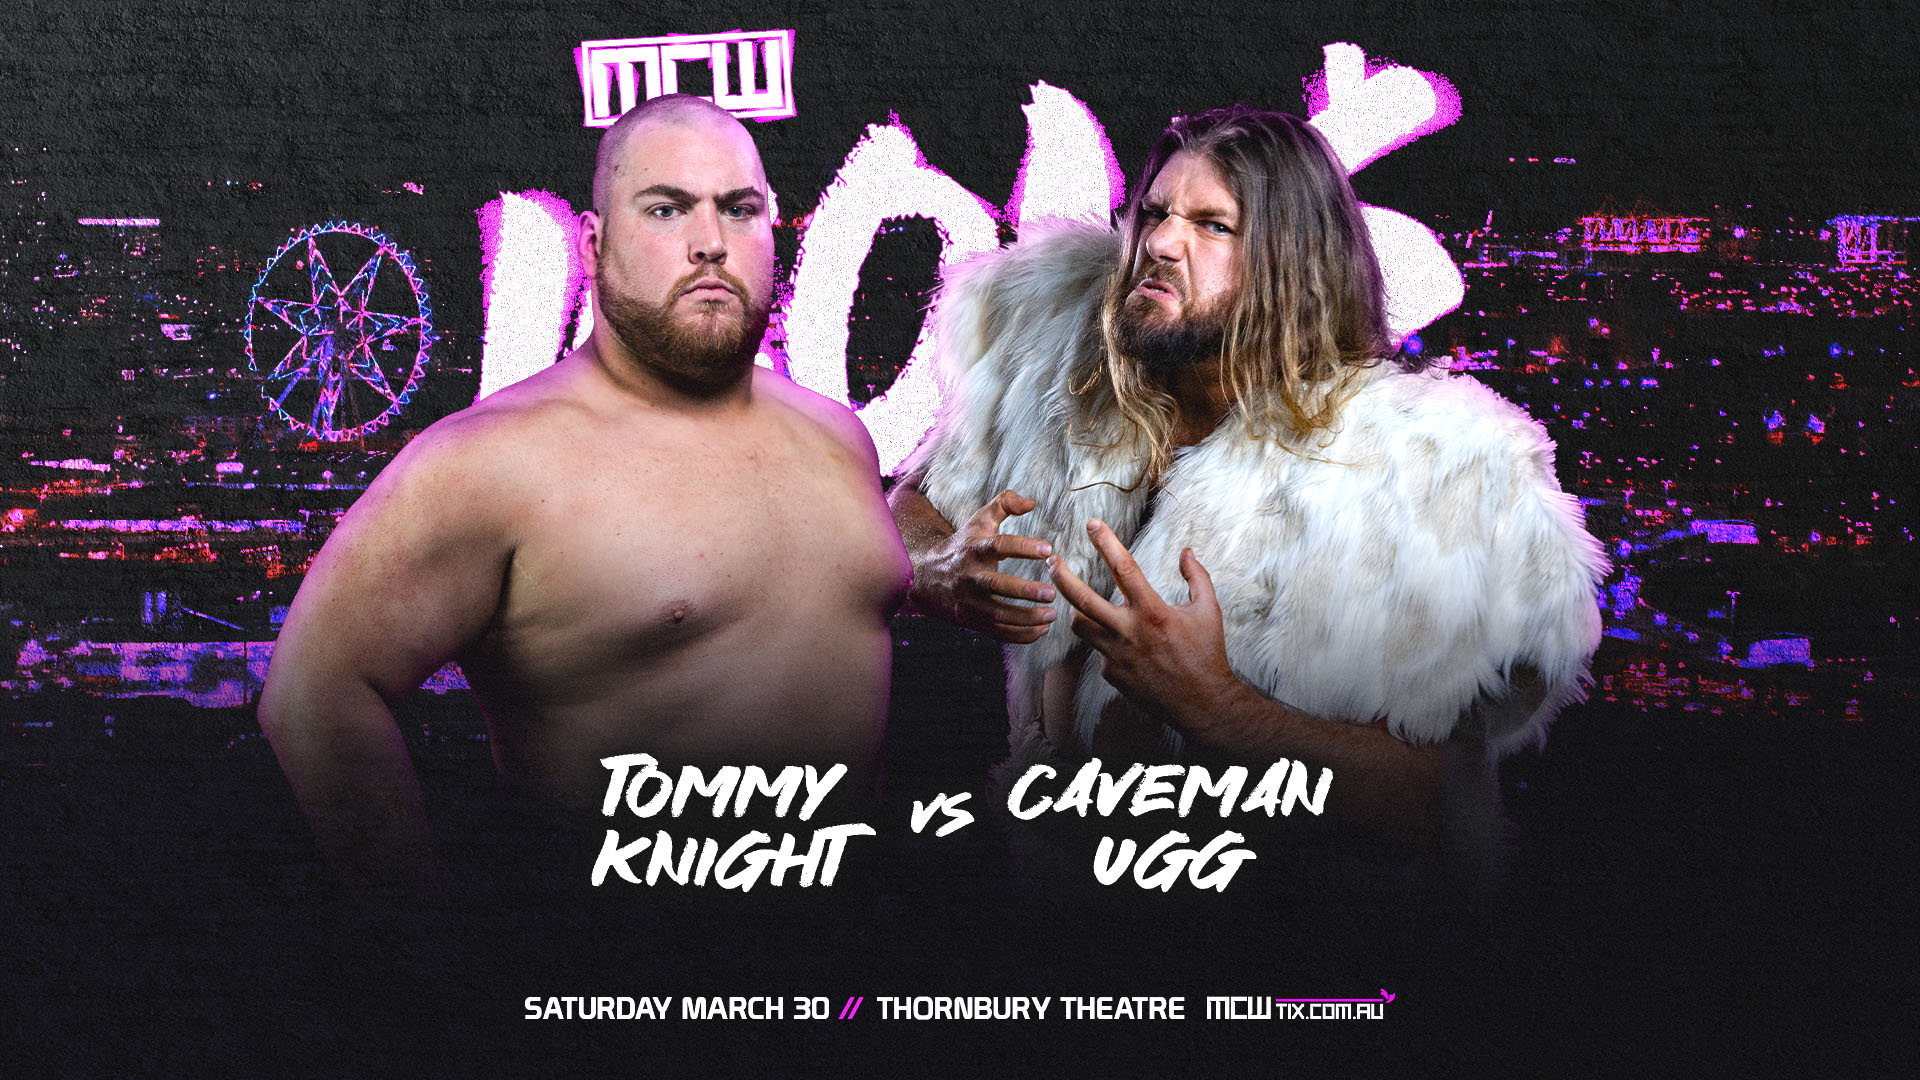 Tommy Knight vs. Caveman Ugg